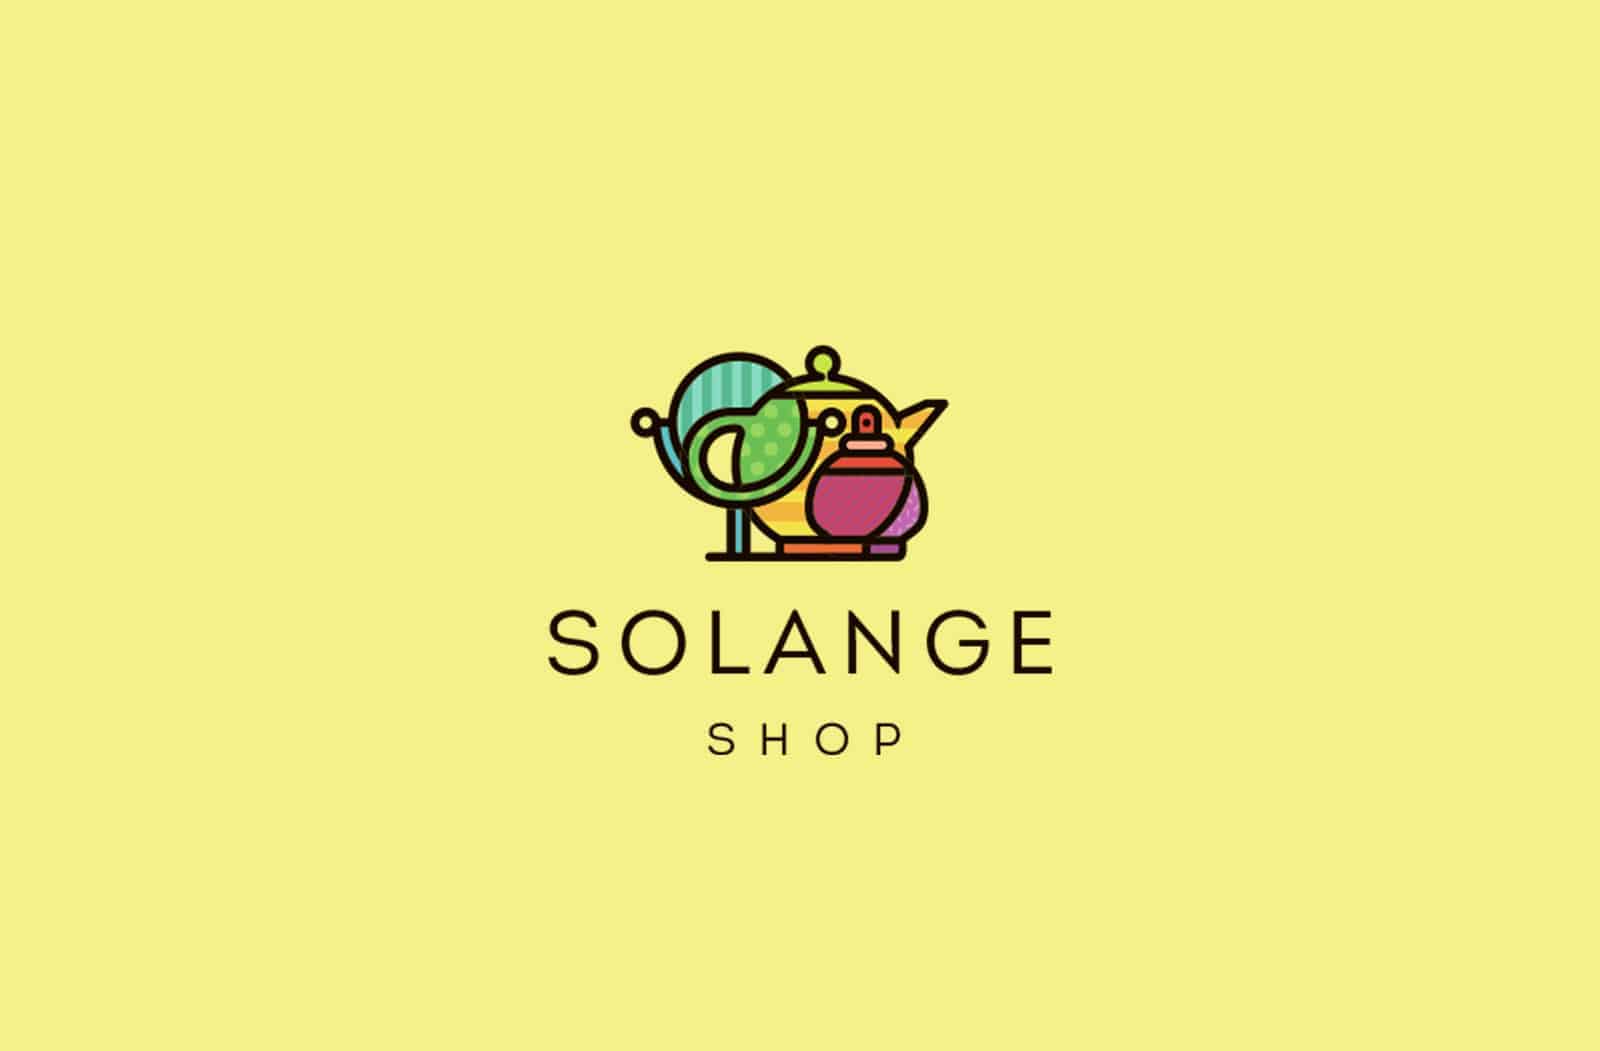 Solange Shop Branding